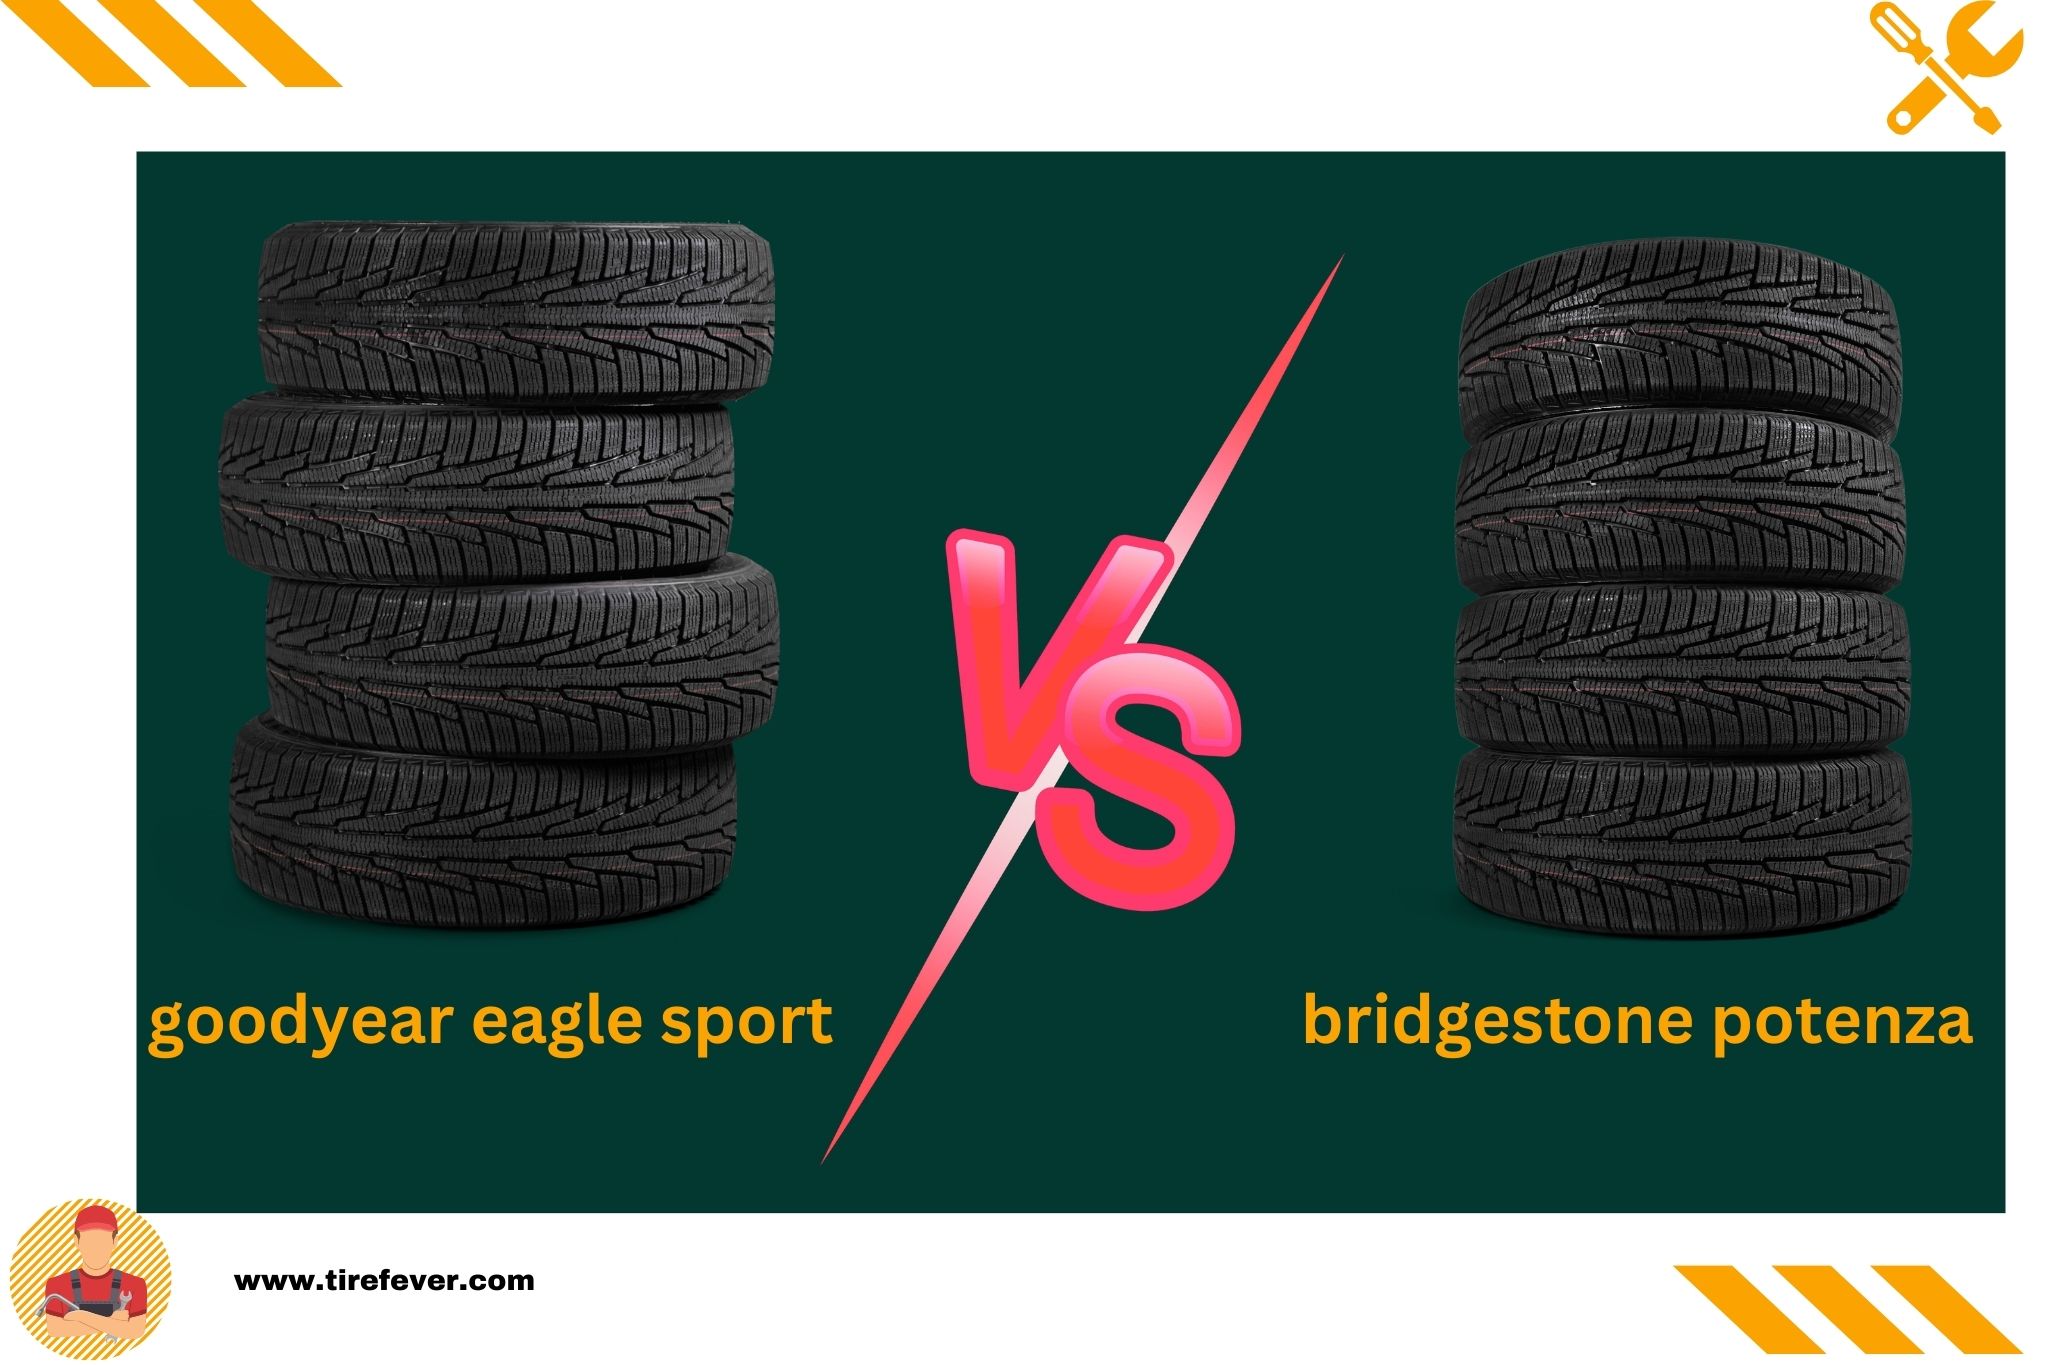 goodyear eagle sport vs bridgestone potenza